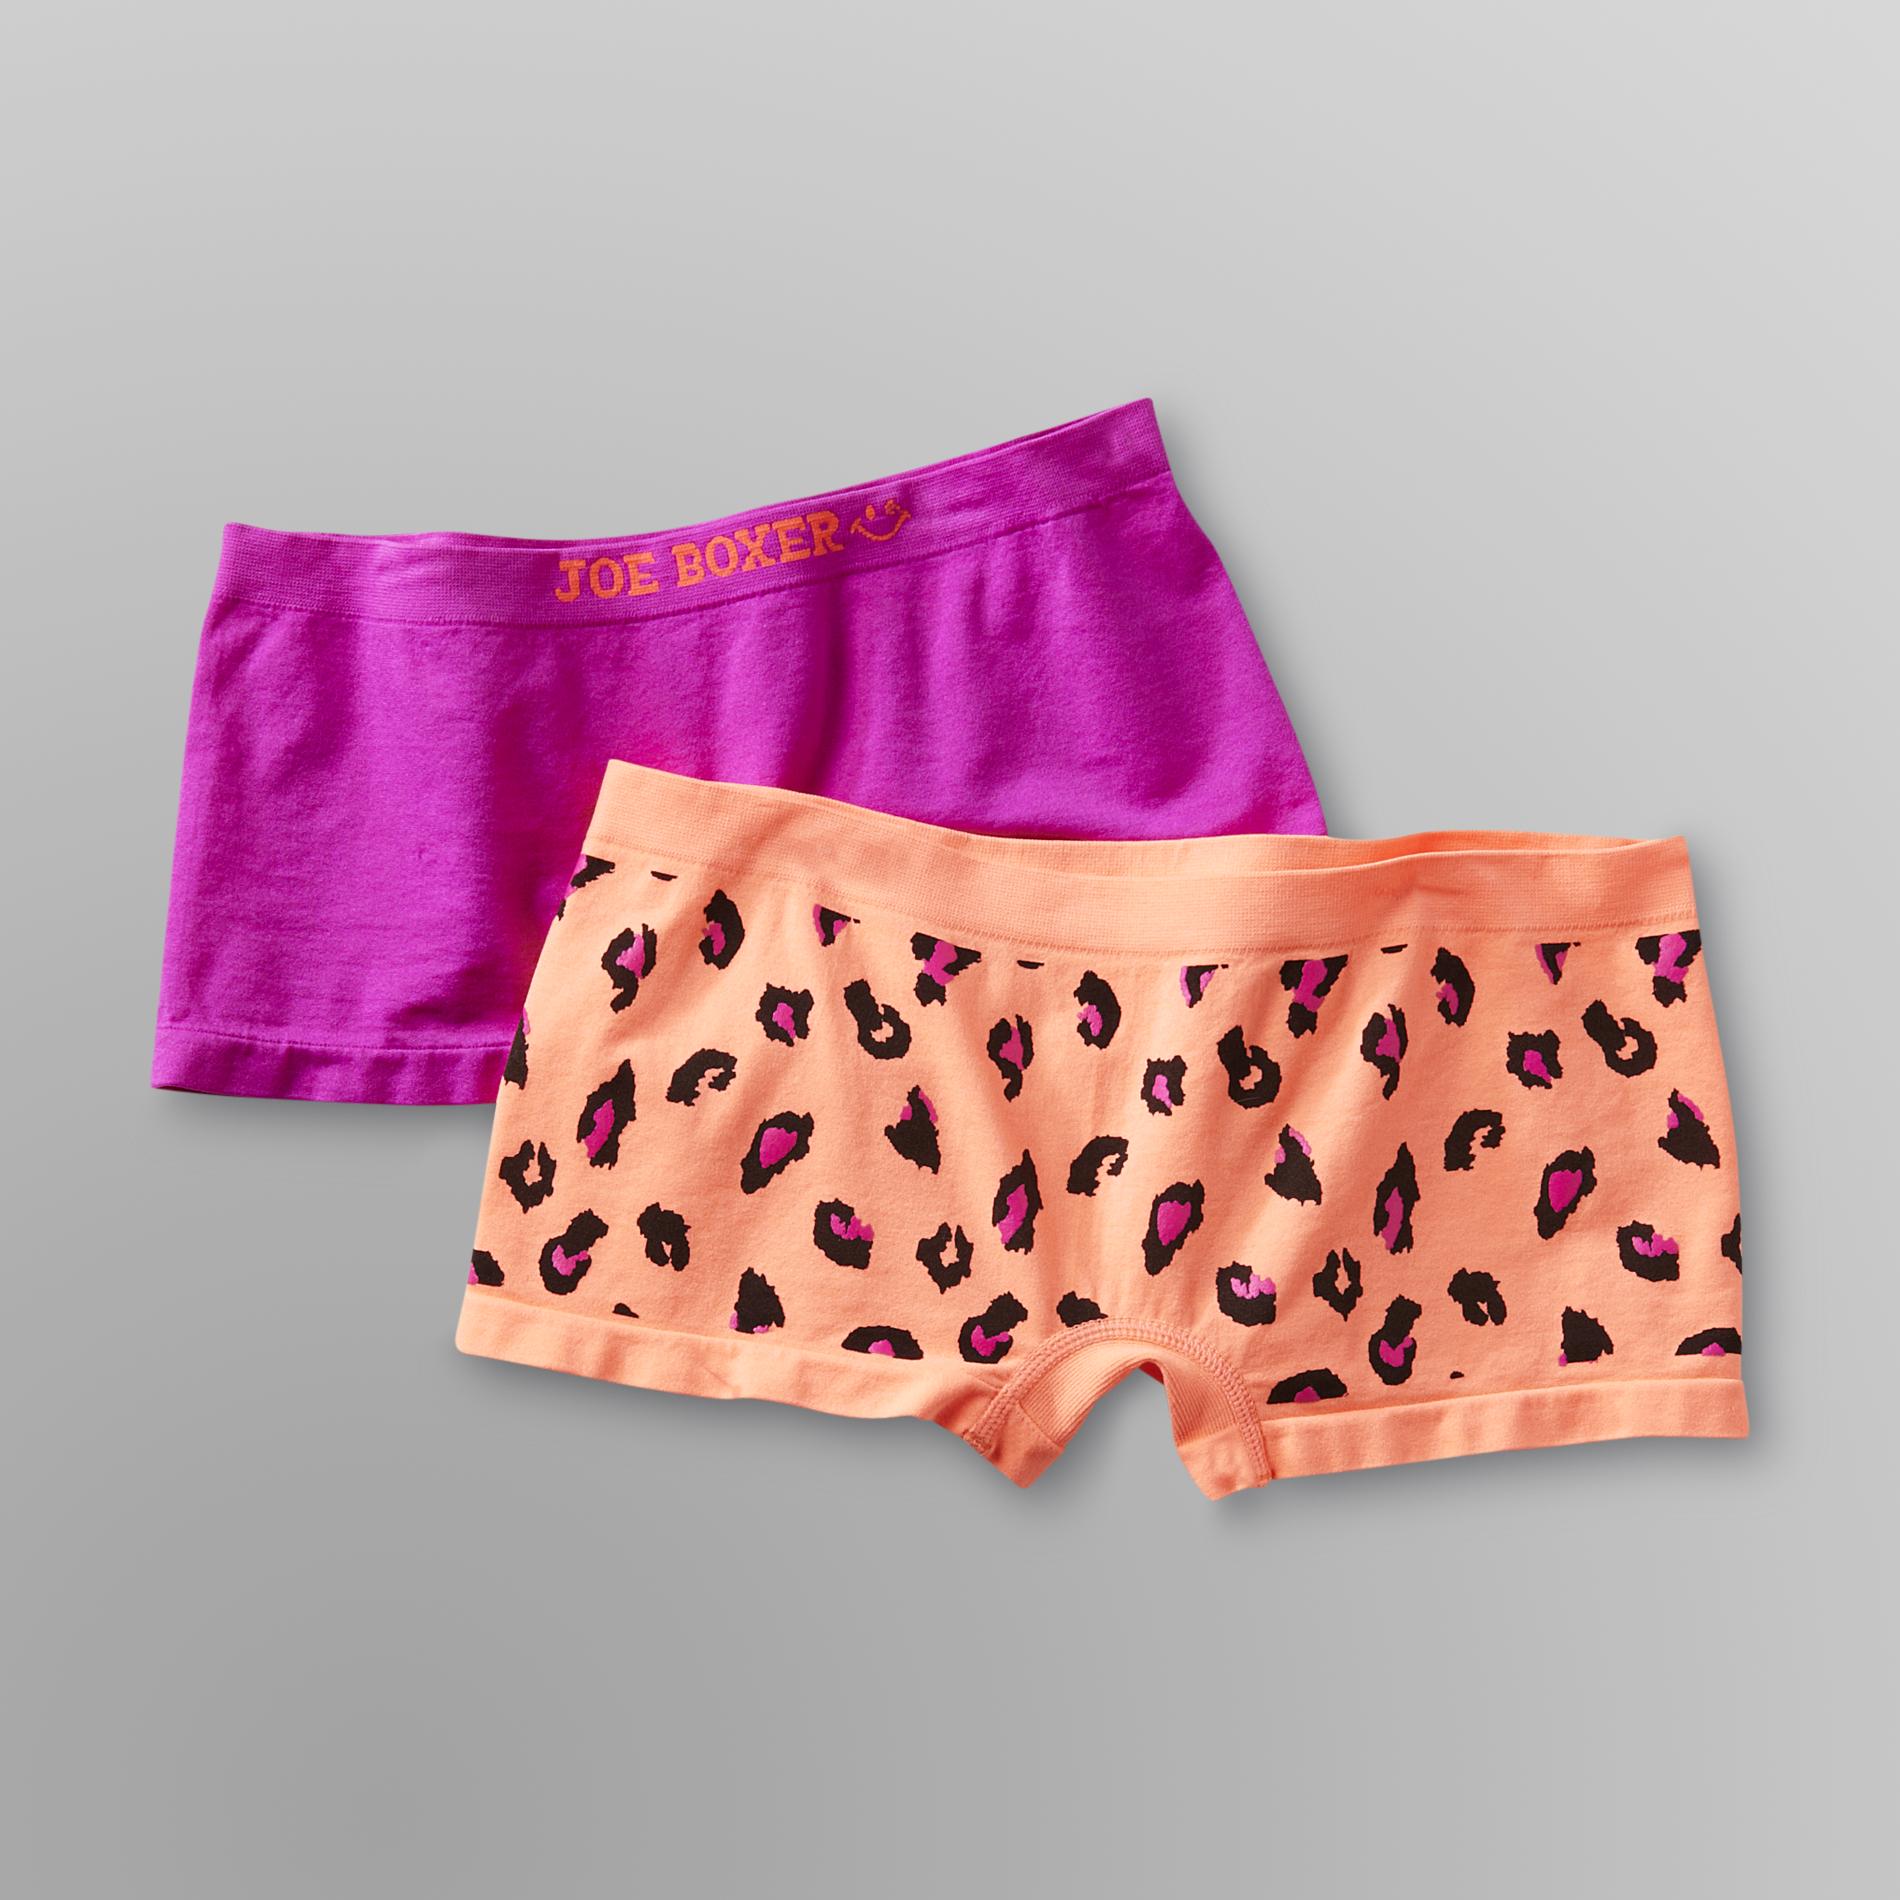 Joe Boxer 2-Pack Women's Boy Short Panties - Leopard Print